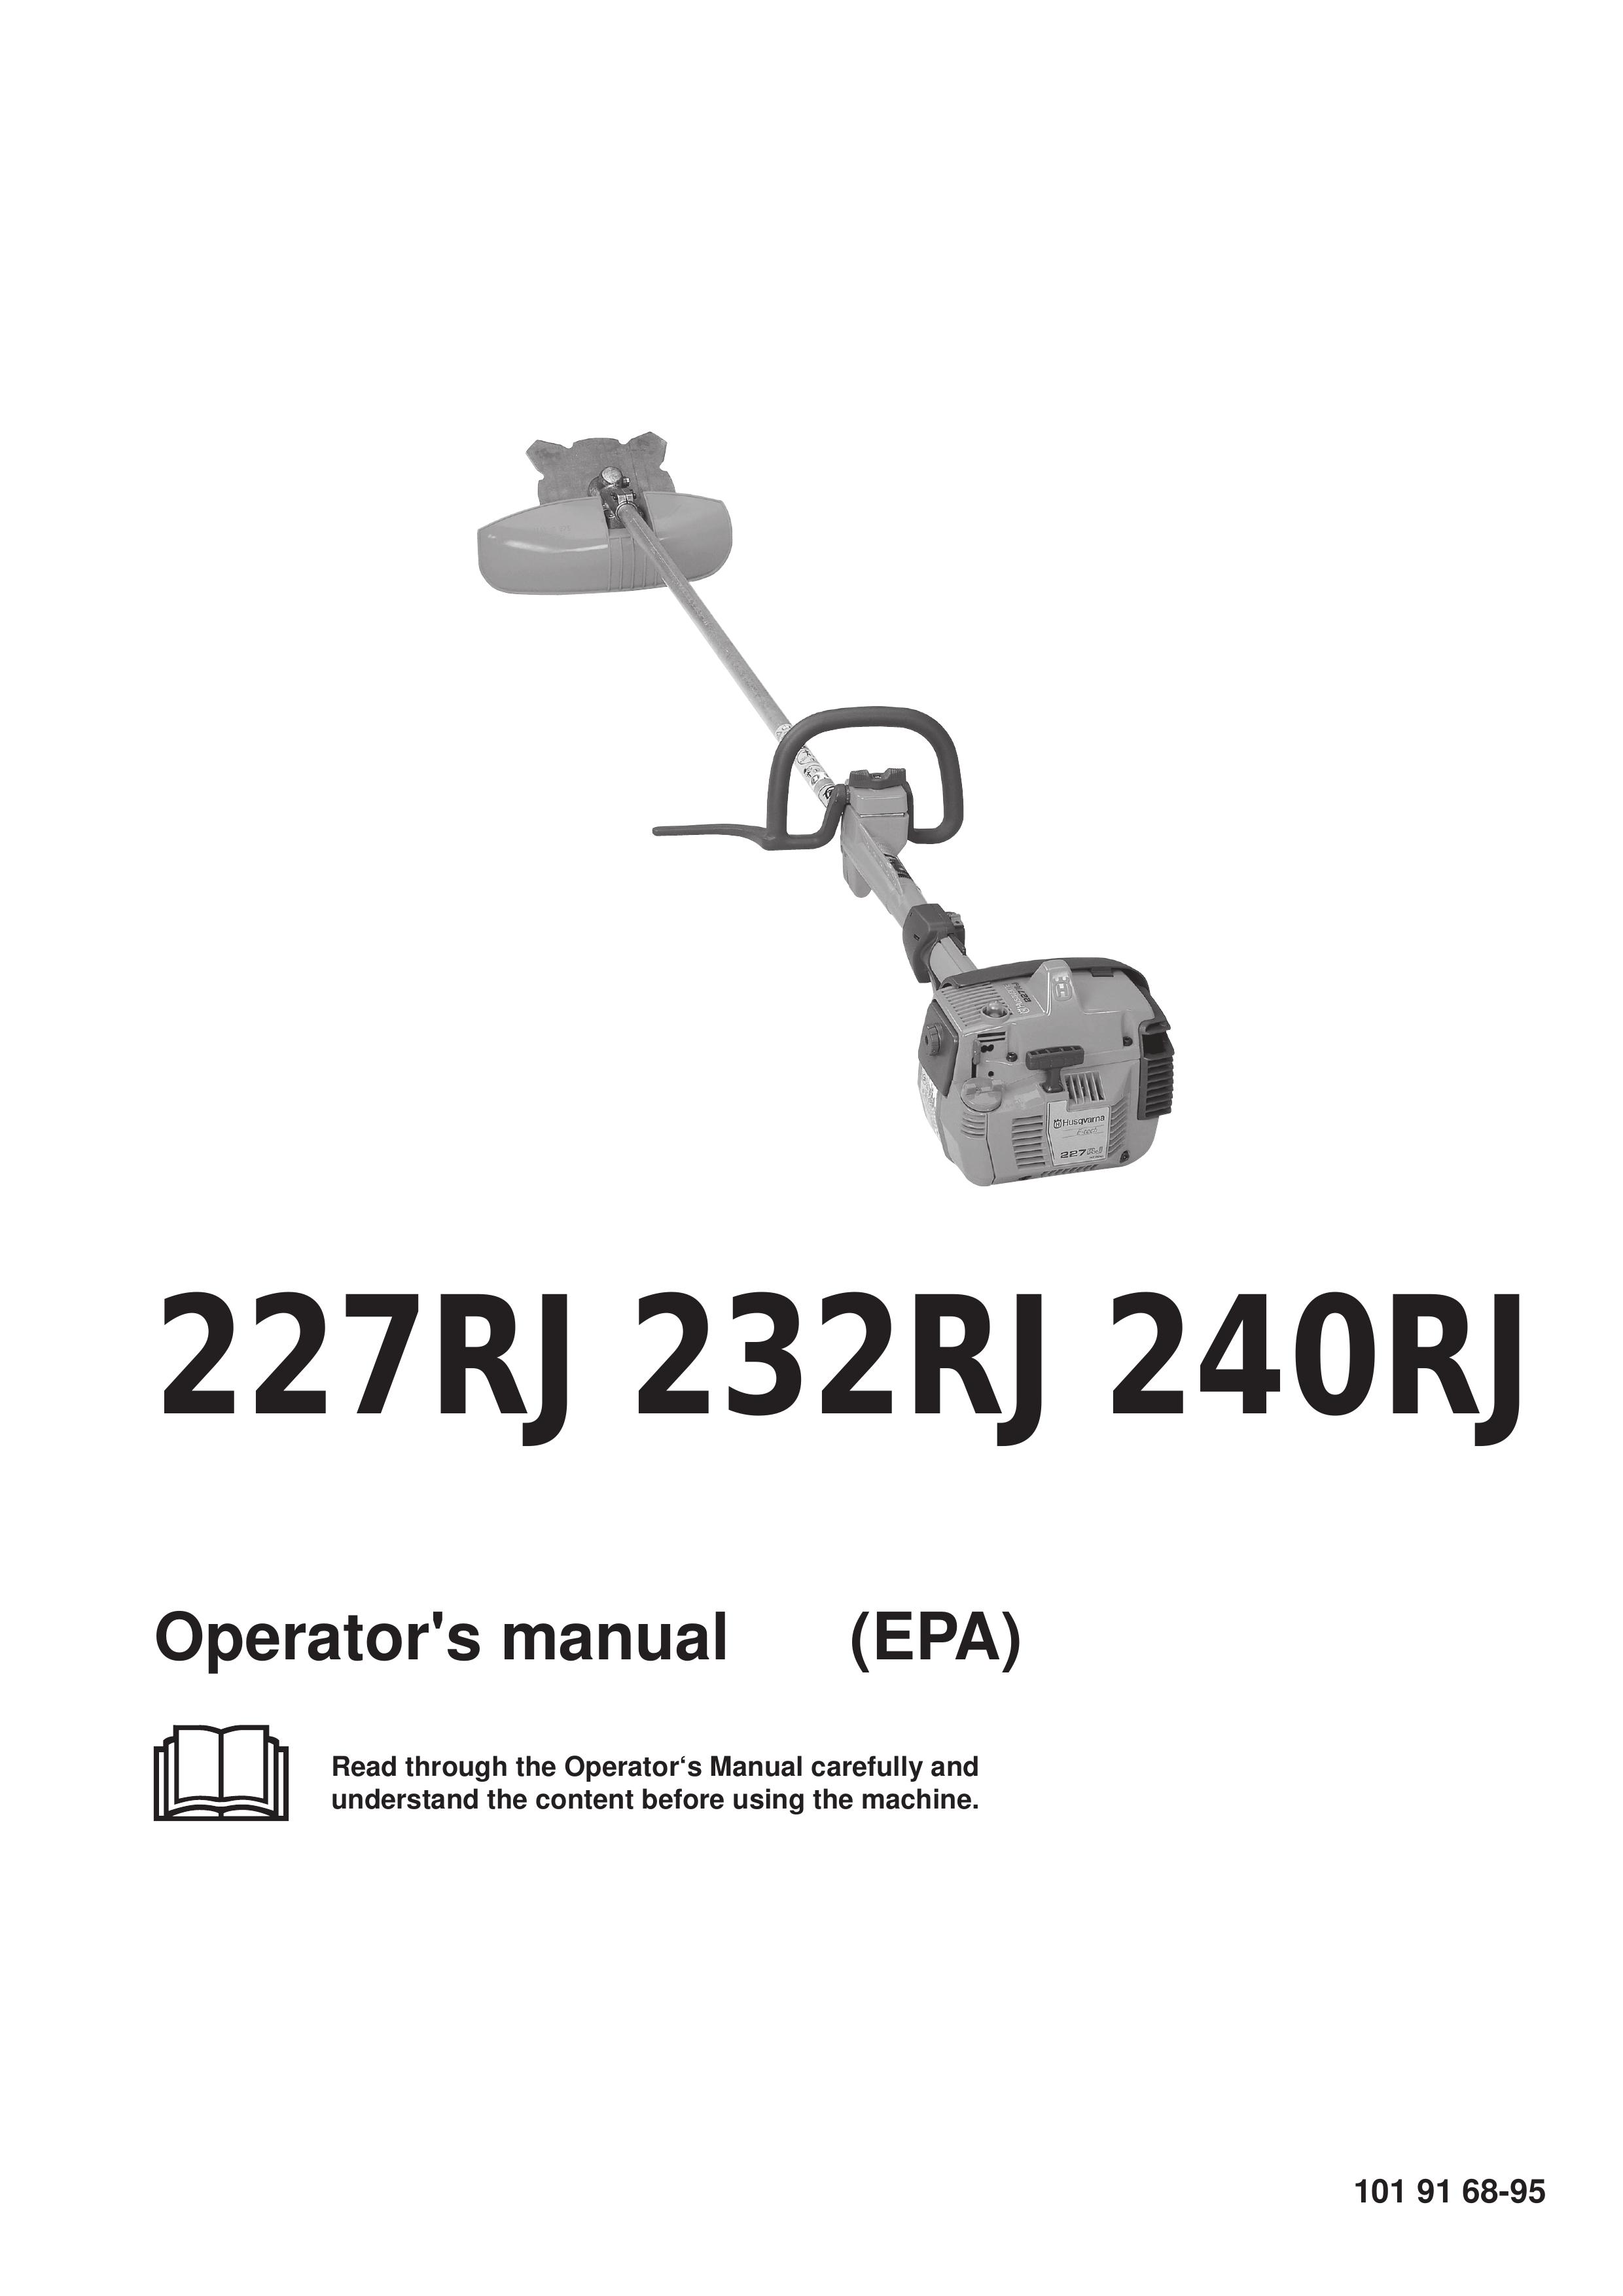 Husqvarna 232RJ Trimmer User Manual